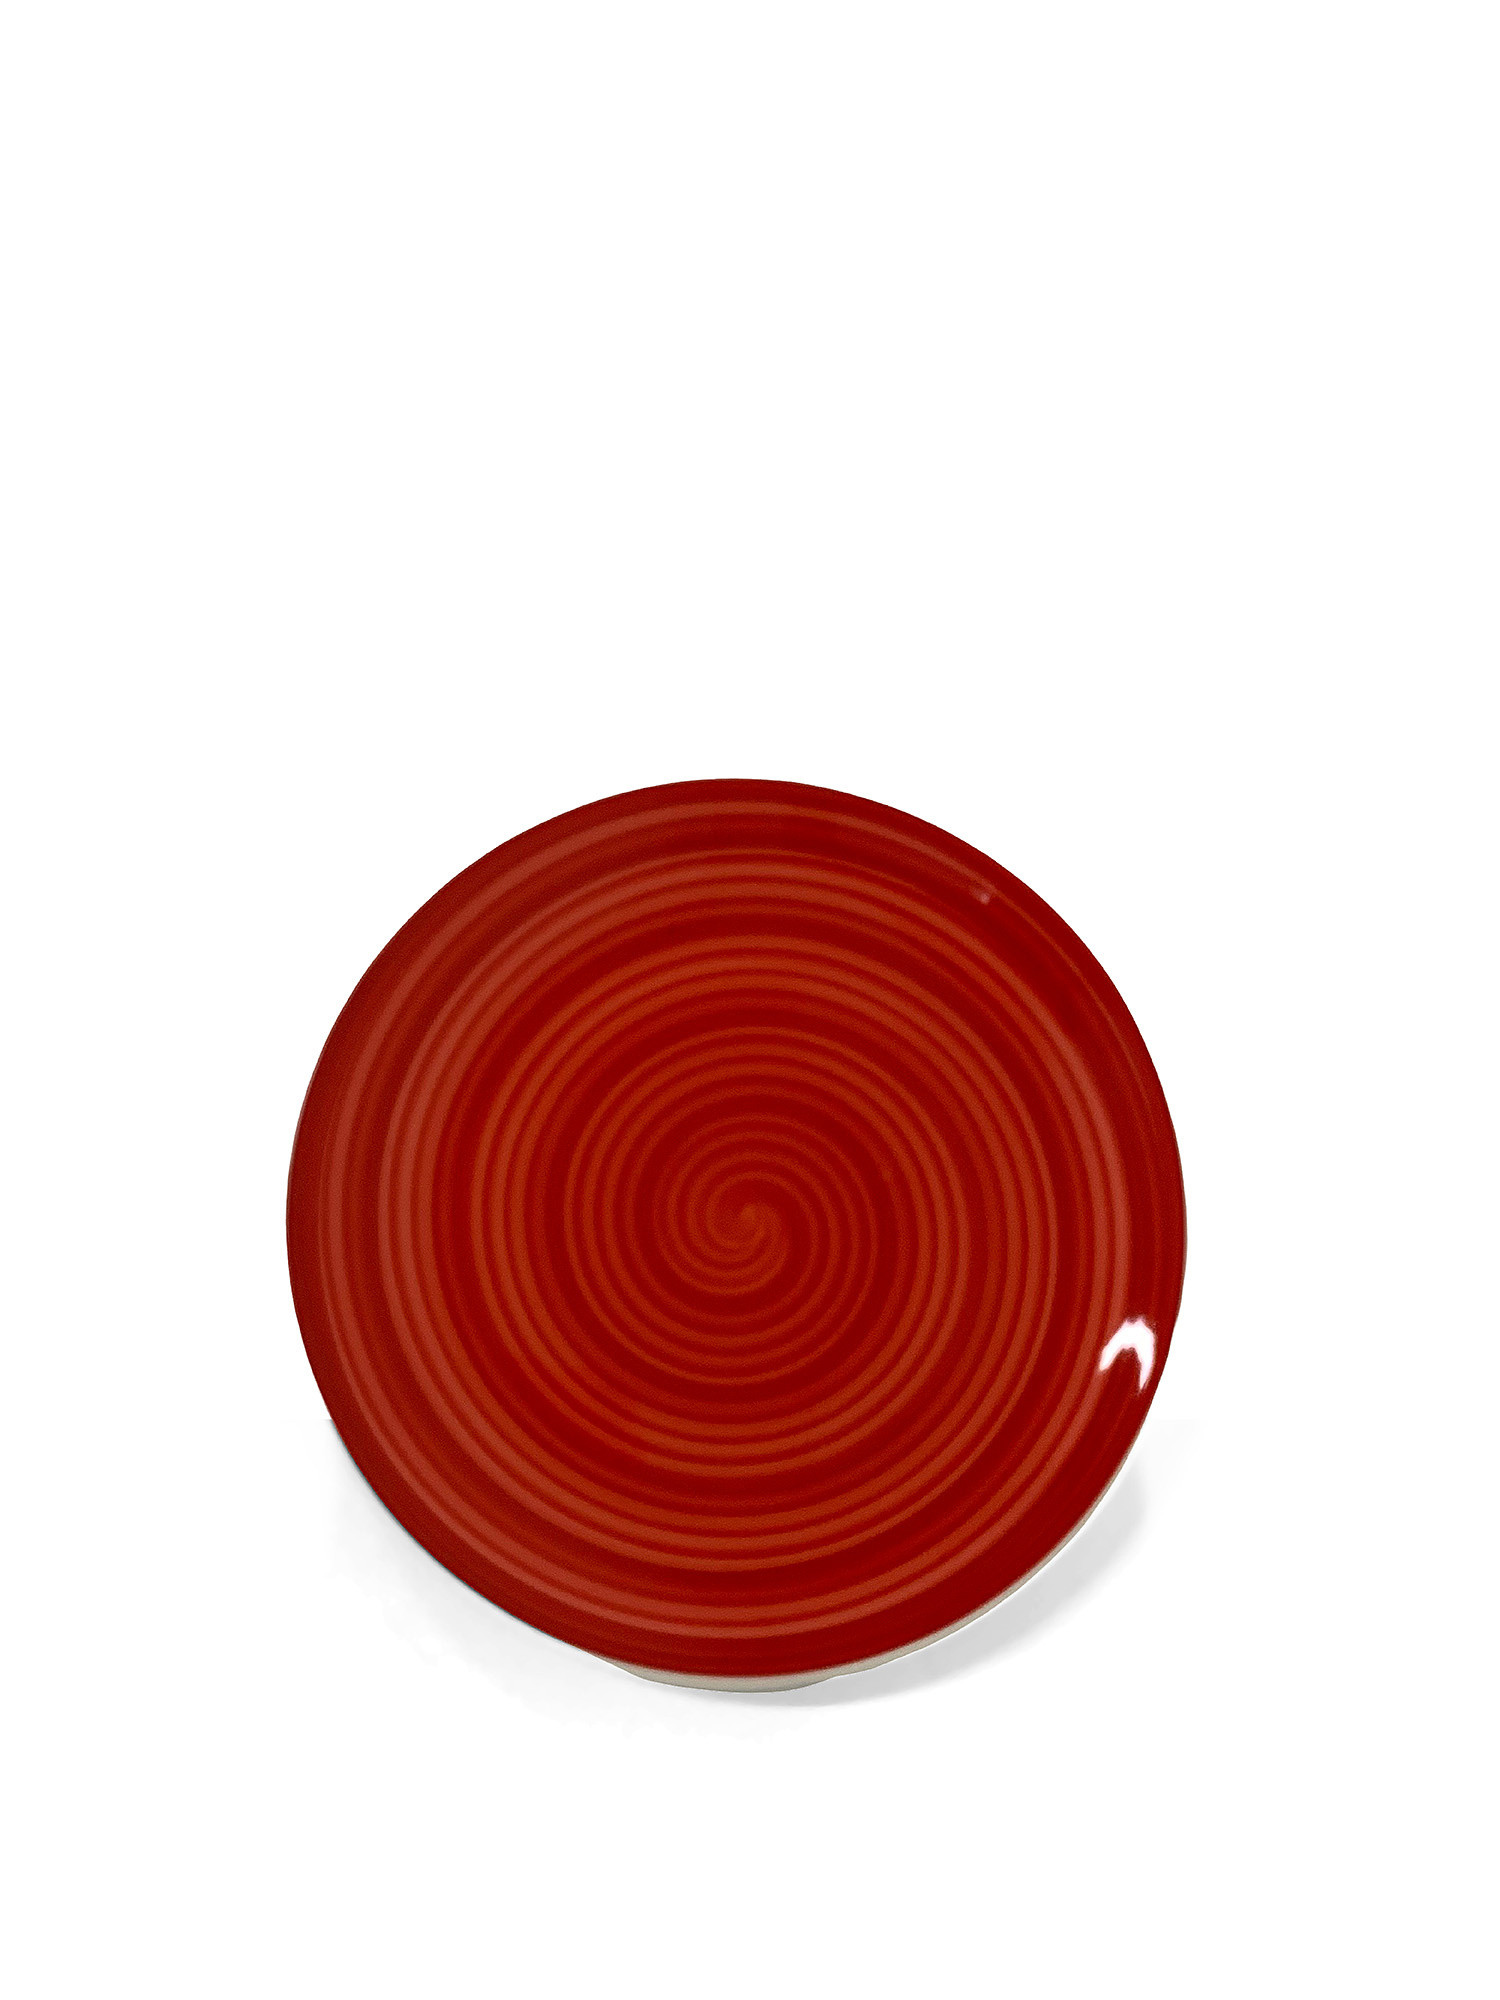 Piatto piano ceramica dipinta a mano Spirale, Rosso, large image number 0